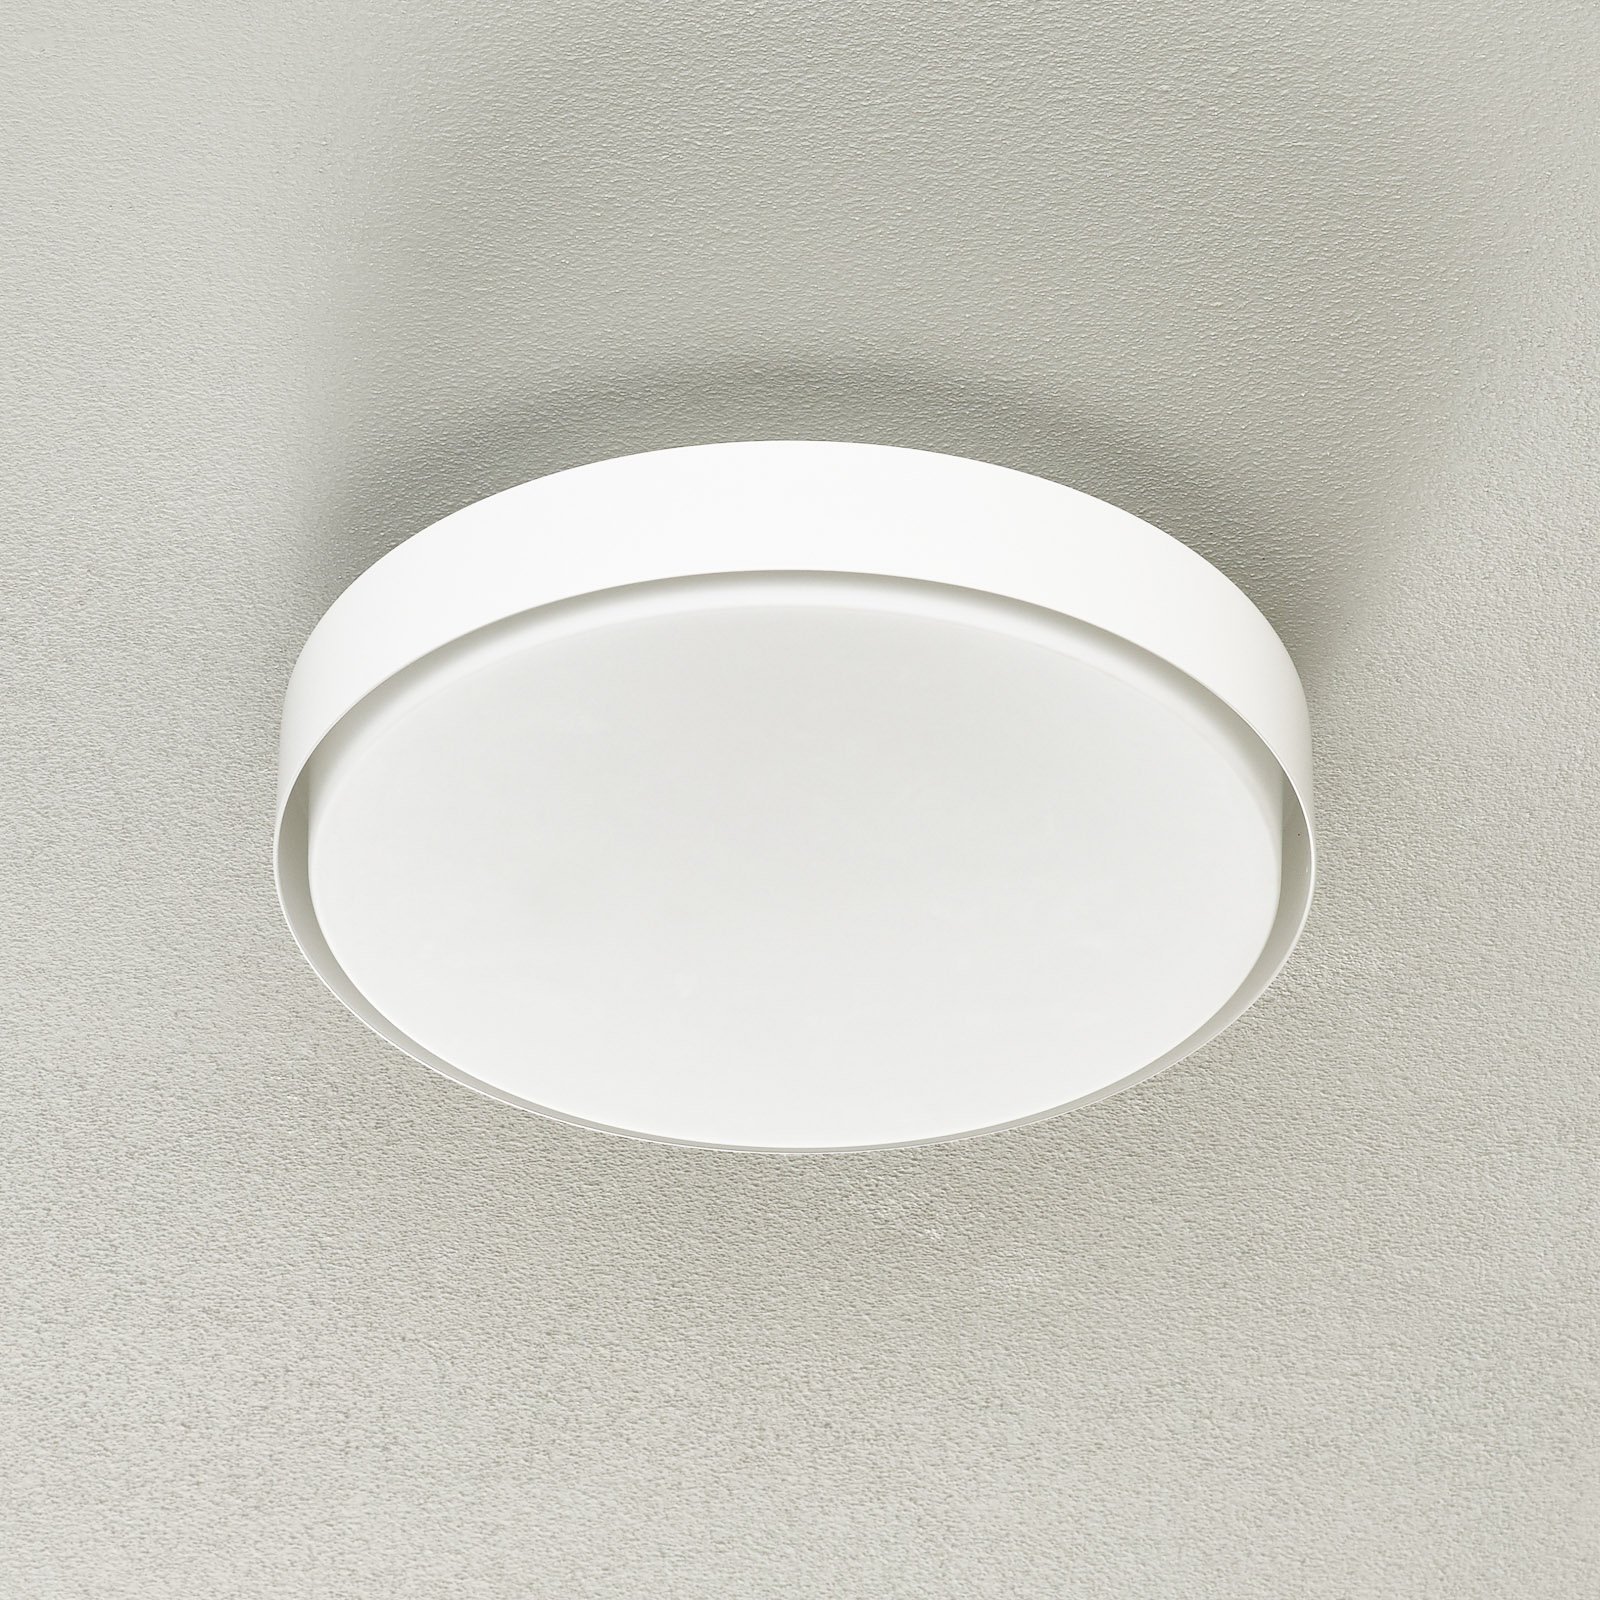 BEGA 34278 LED plafondlamp, wit, Ø 36 cm, DALI